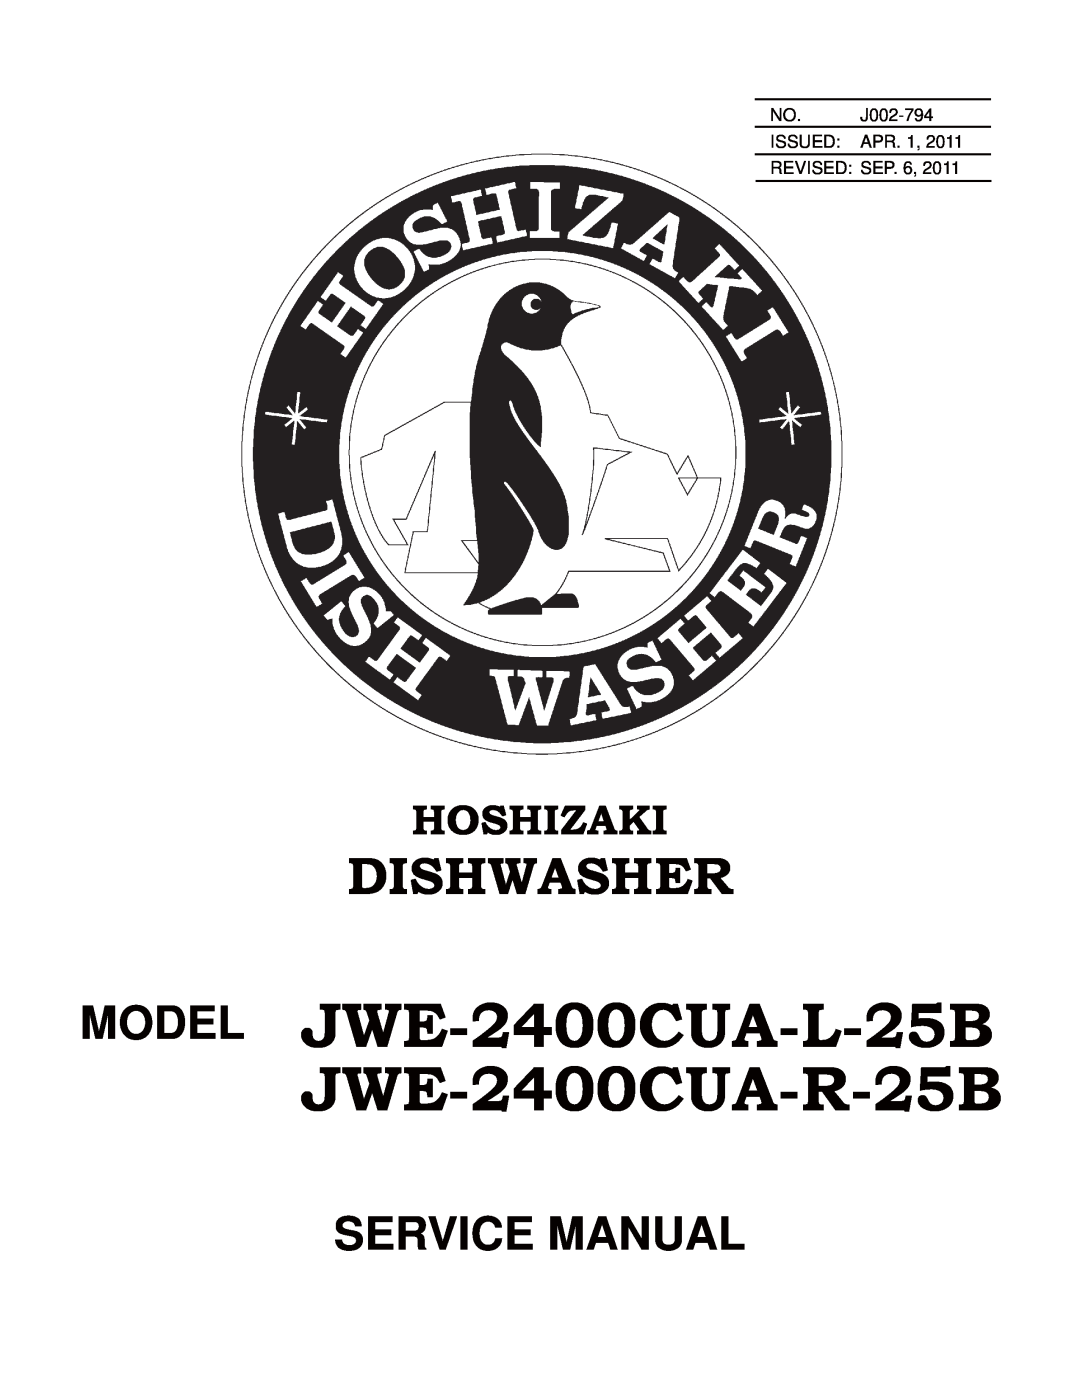 Hoshizaki manual Dishwasher Models, Parts List, JWE-2400CUA-L-25B JWE-2400CUA-R-25B 